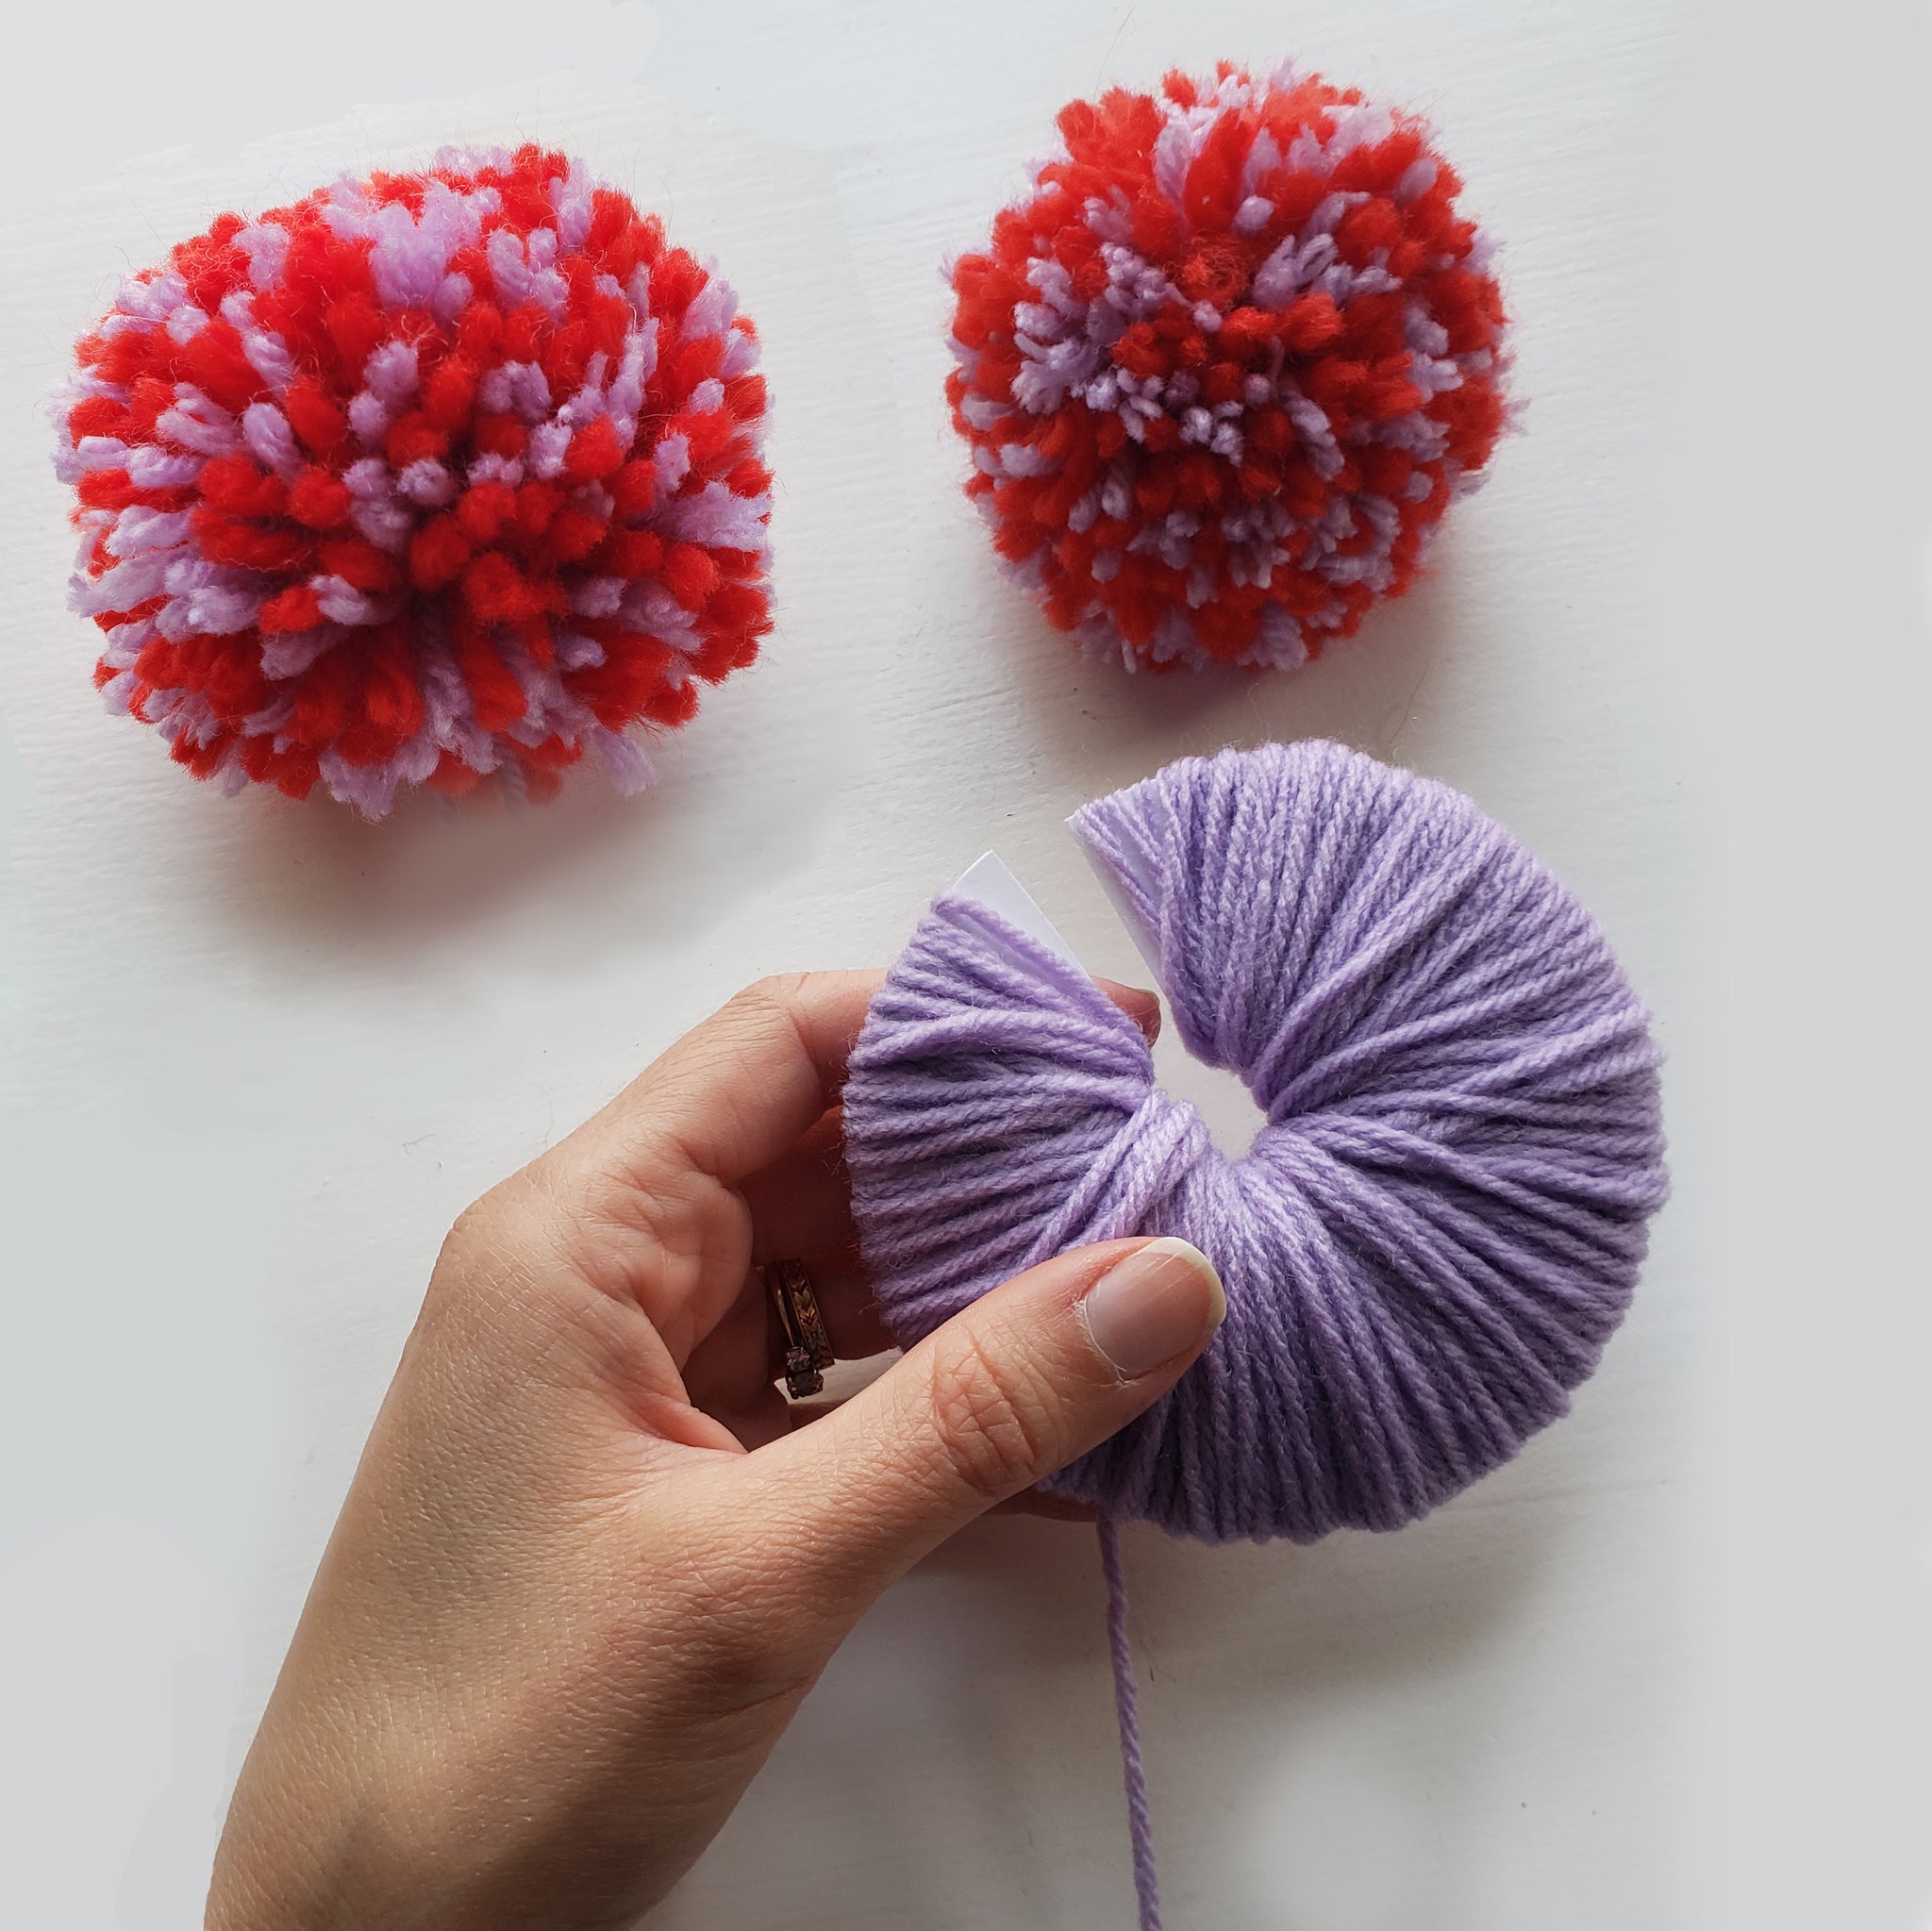 How to make a yarn pom pom